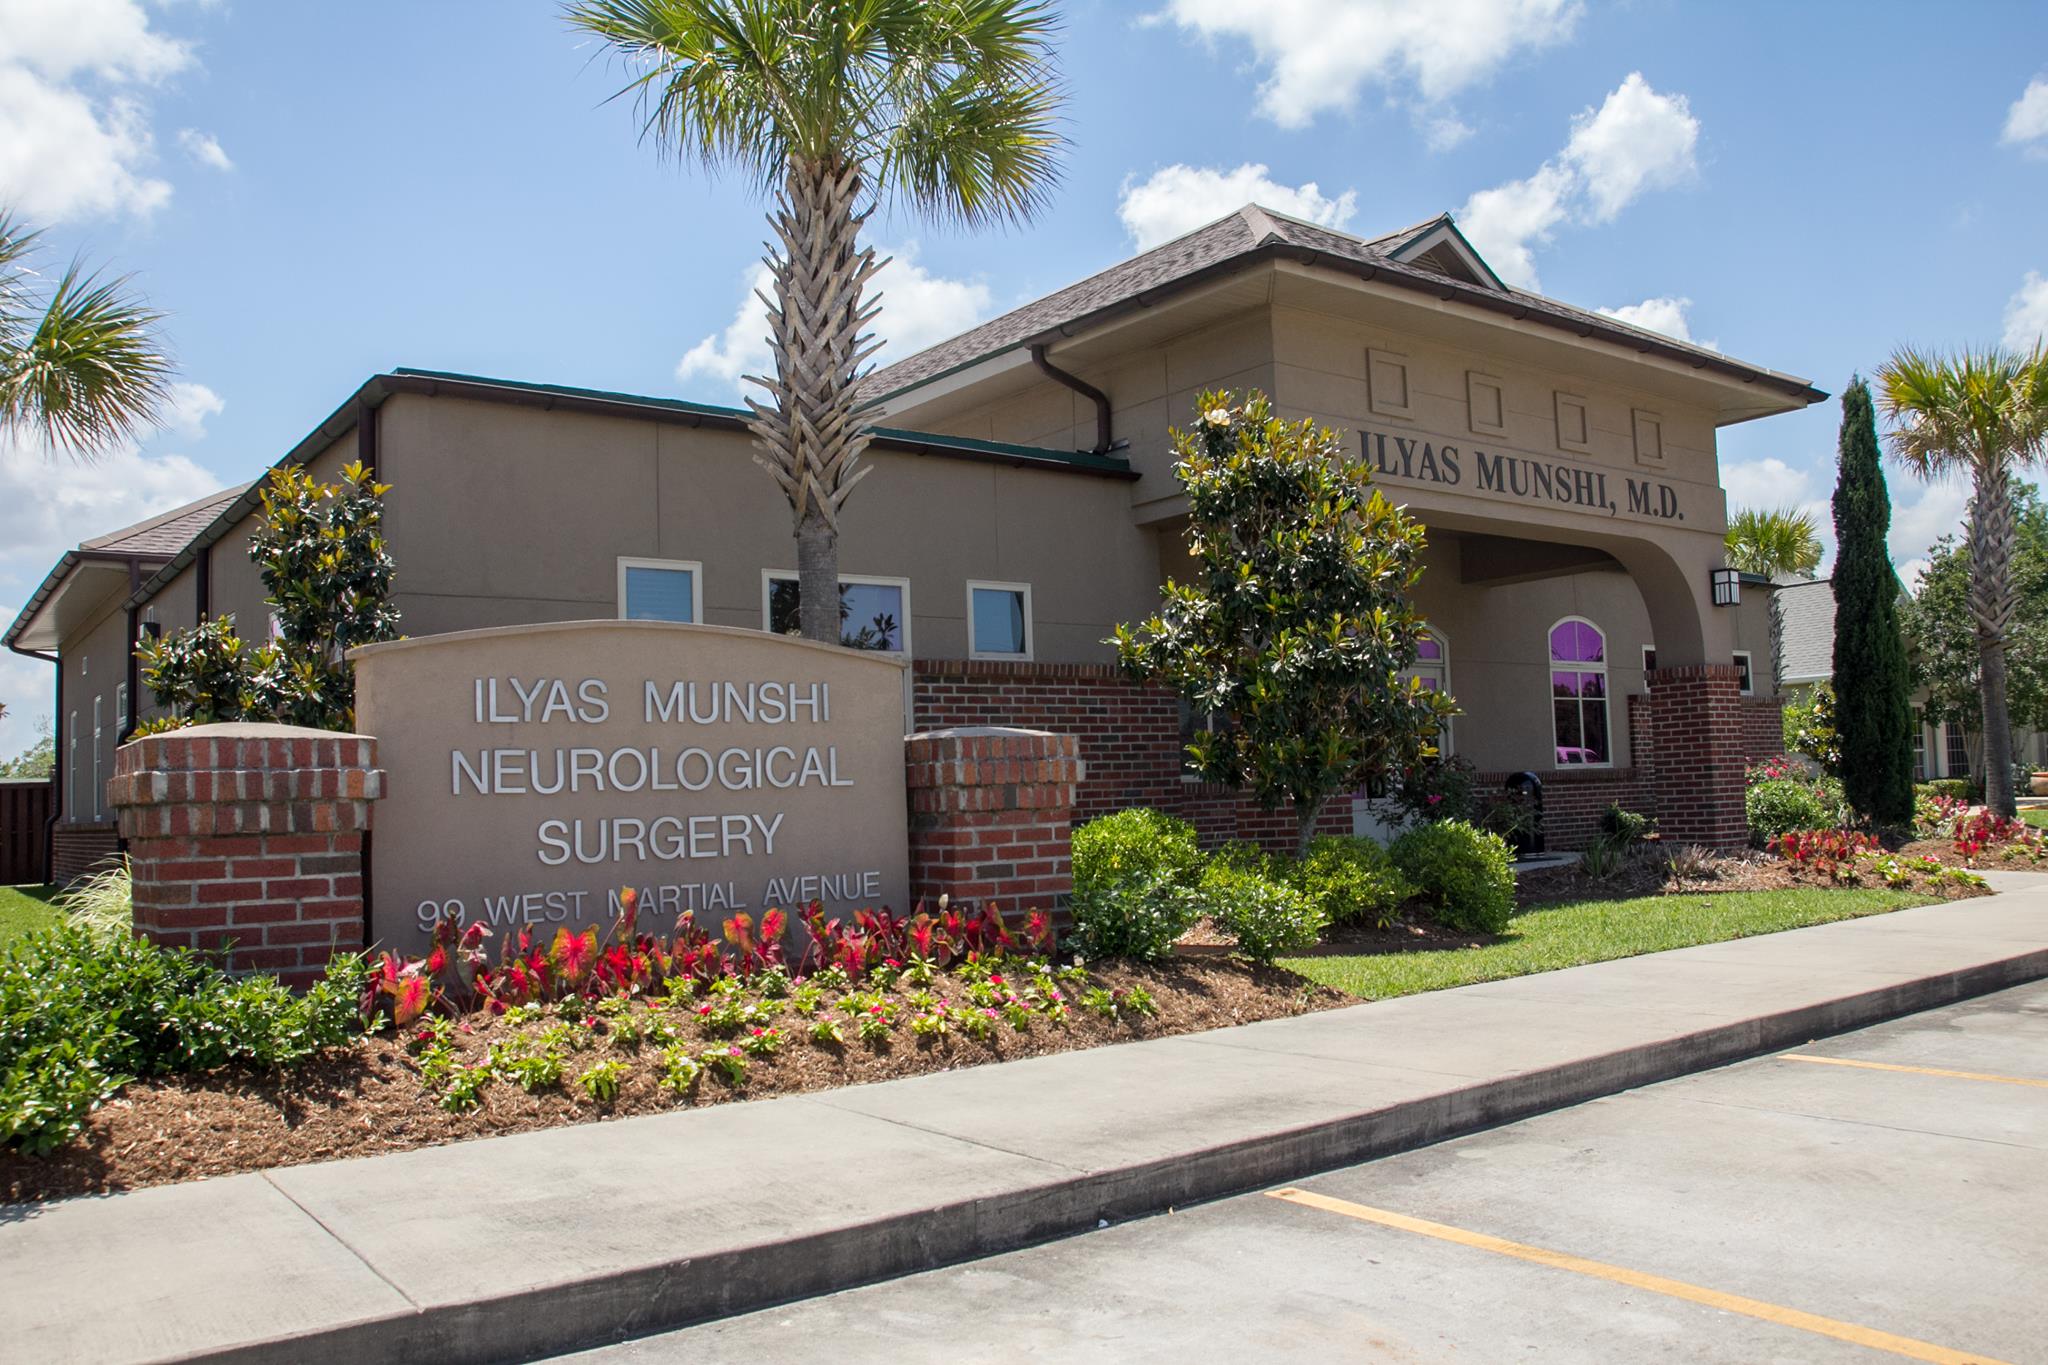 Photo of Ilyas Munshi Neurological Surgery Clinic at 99 West Martial Avenue in Lafayette, Louisiana